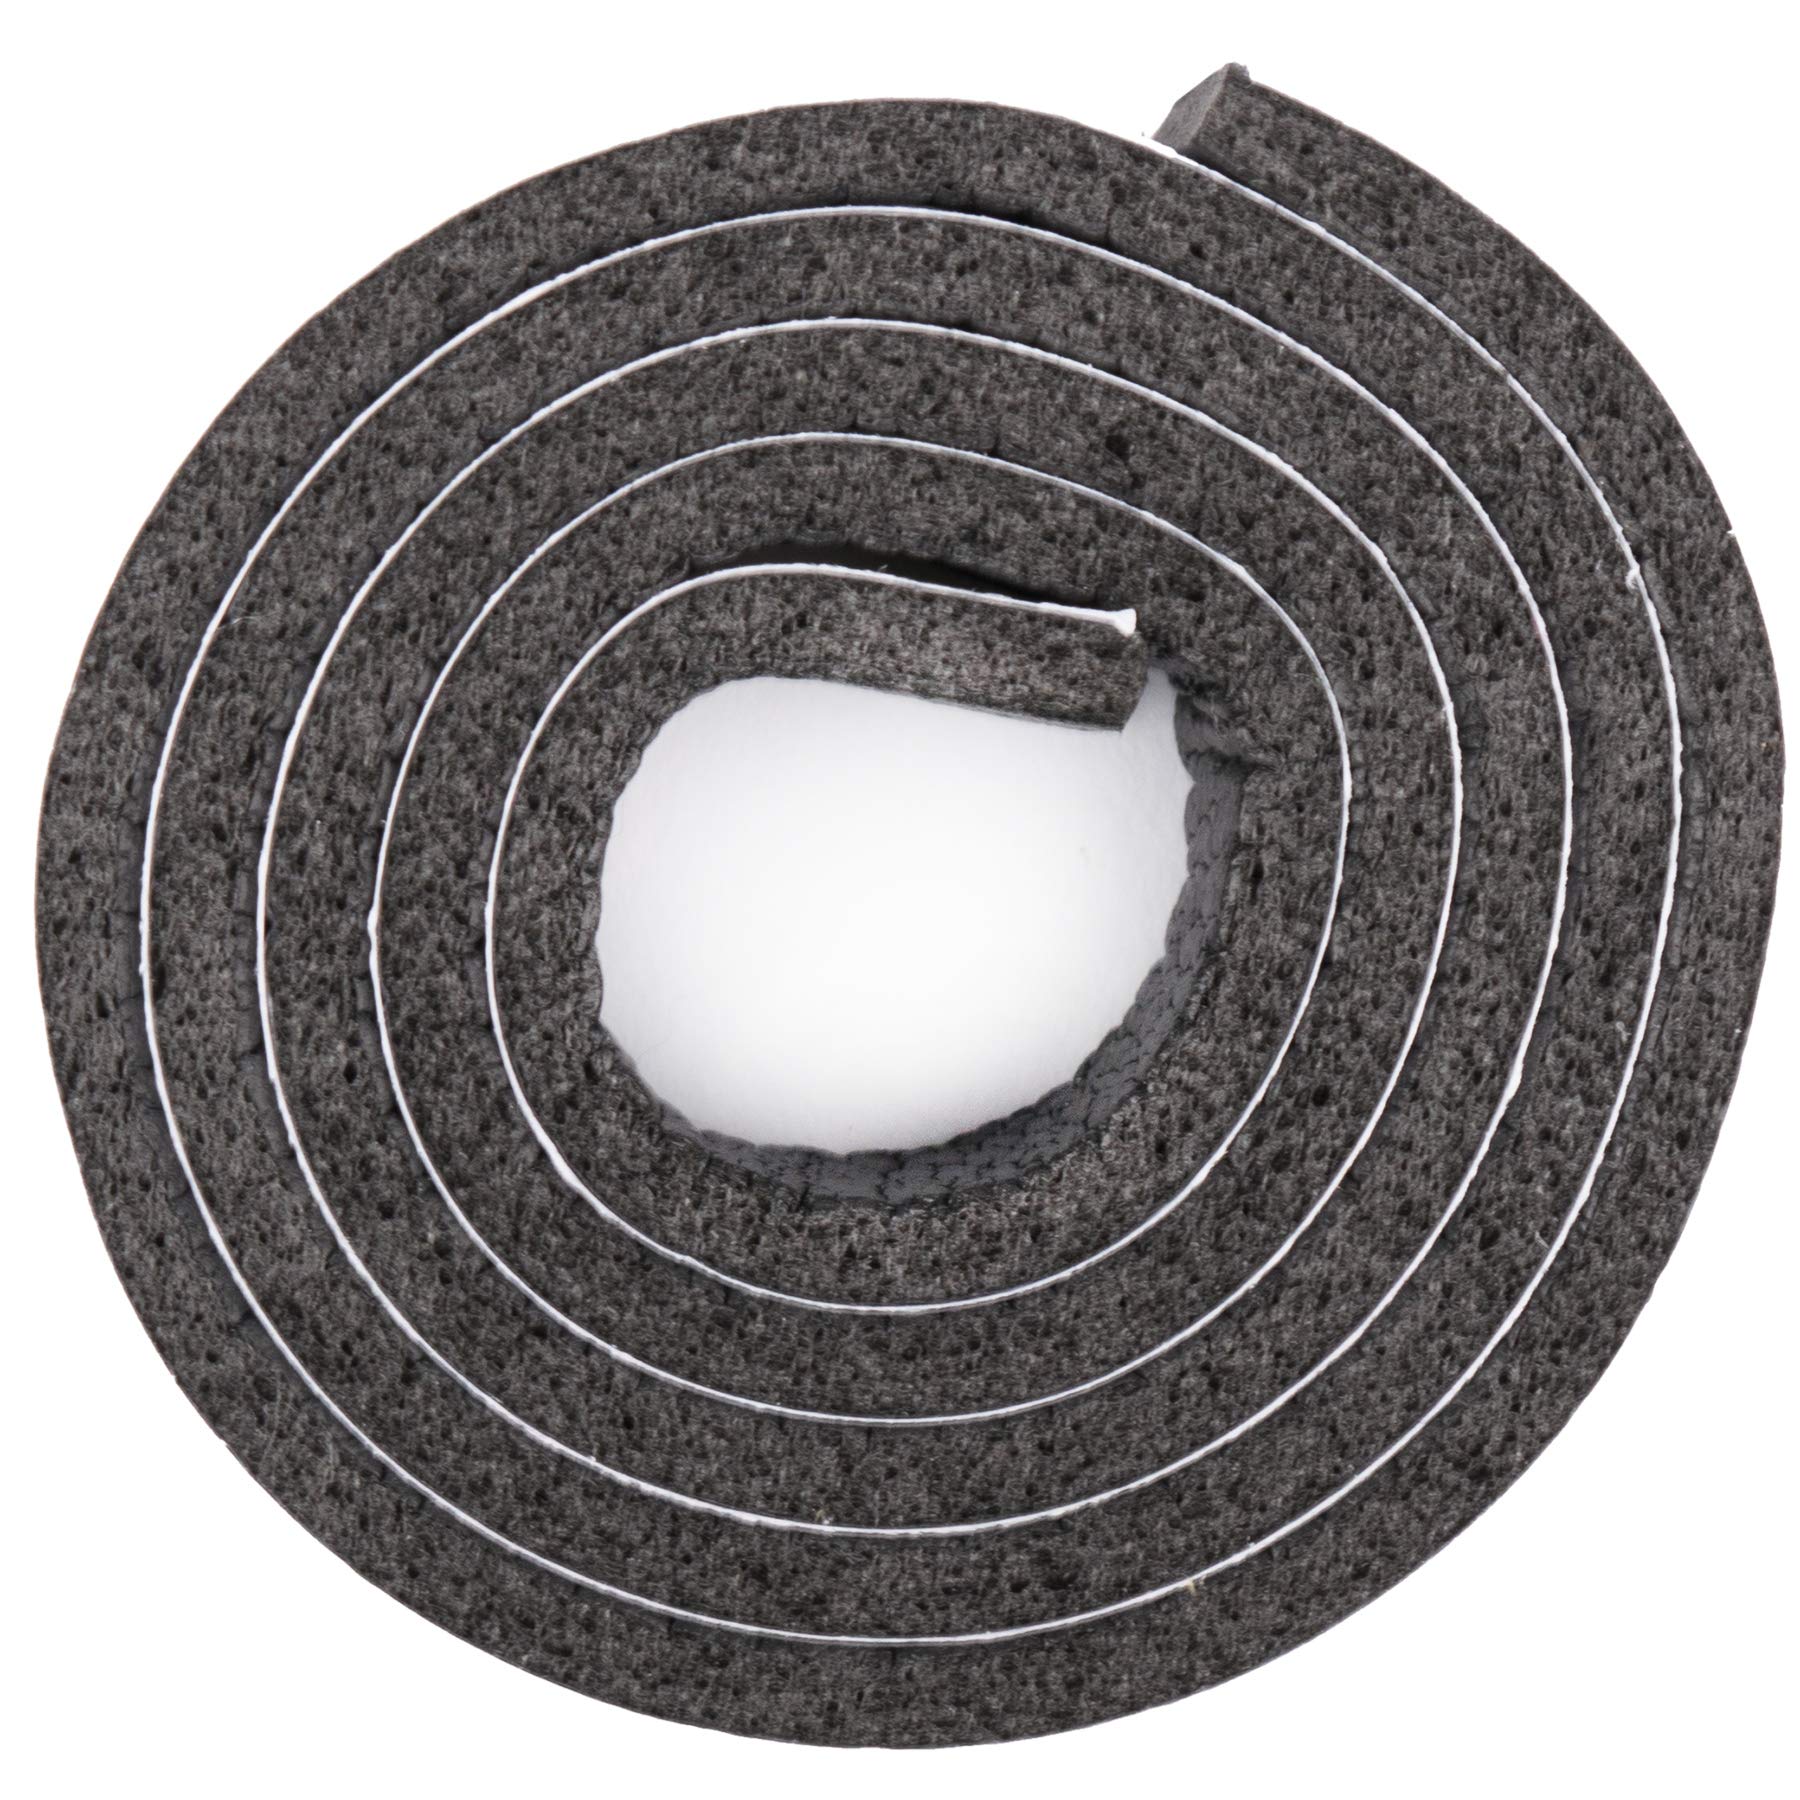 zakira 120804 ZAKIRA Hat Size Reducer Foam Tape Roll - Self Adhesive Strip  Insert 60cm (24in) Dark Grey